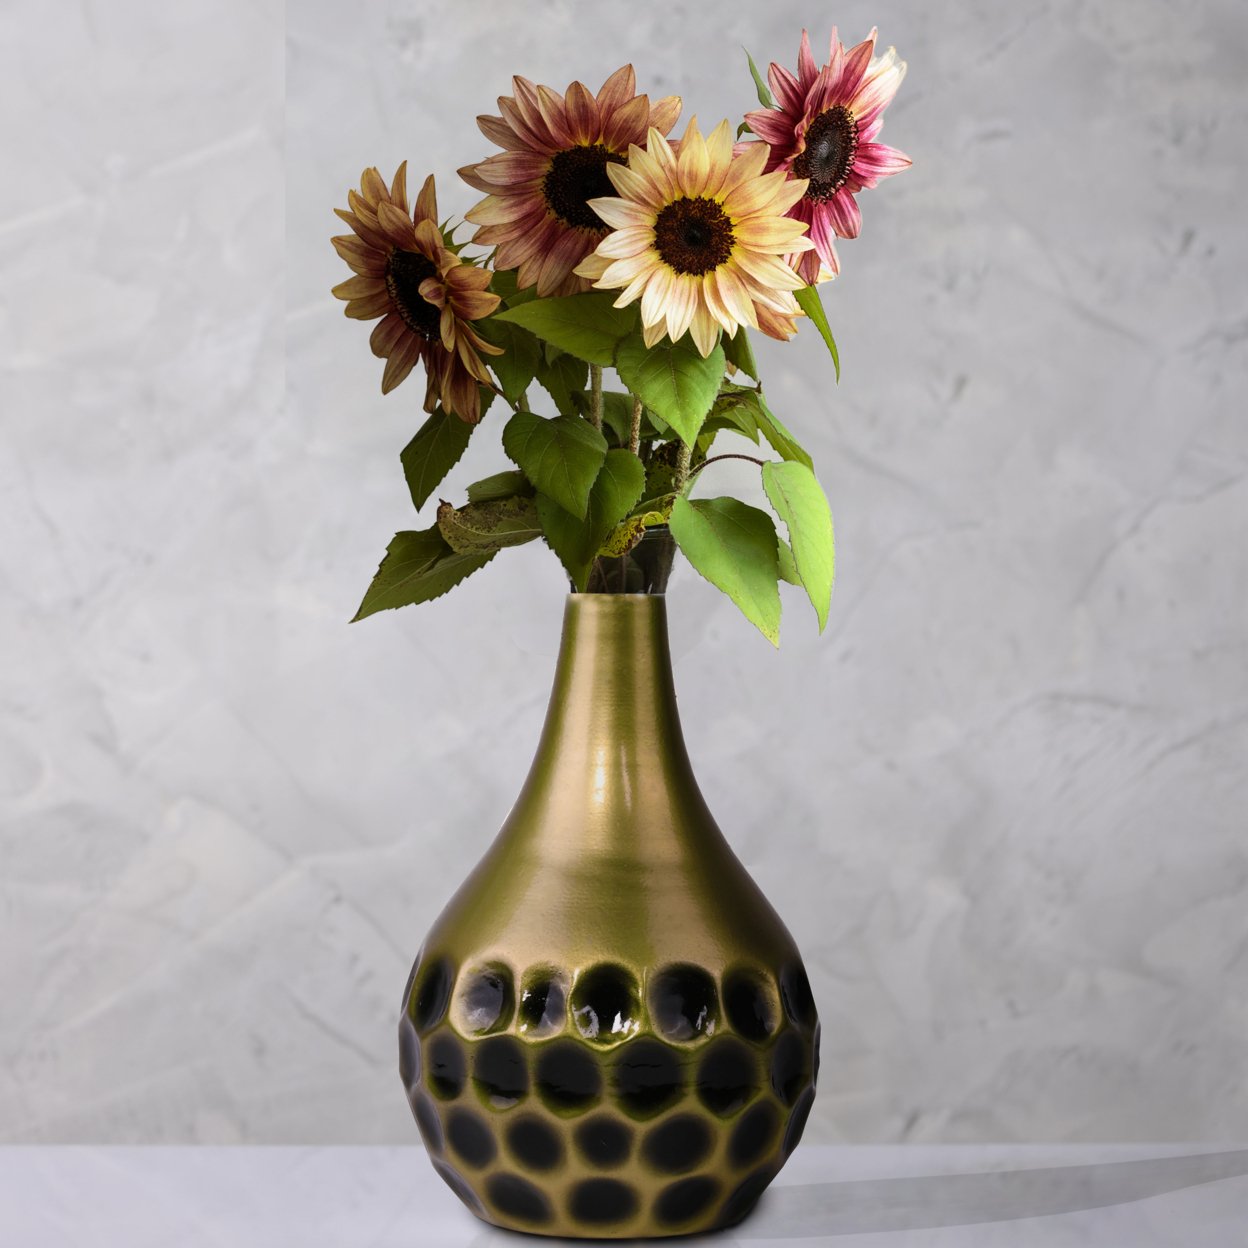 Decorative Modern Teardrop Shape Table Flower Vase With Black Honeycomb Design For Dining Table